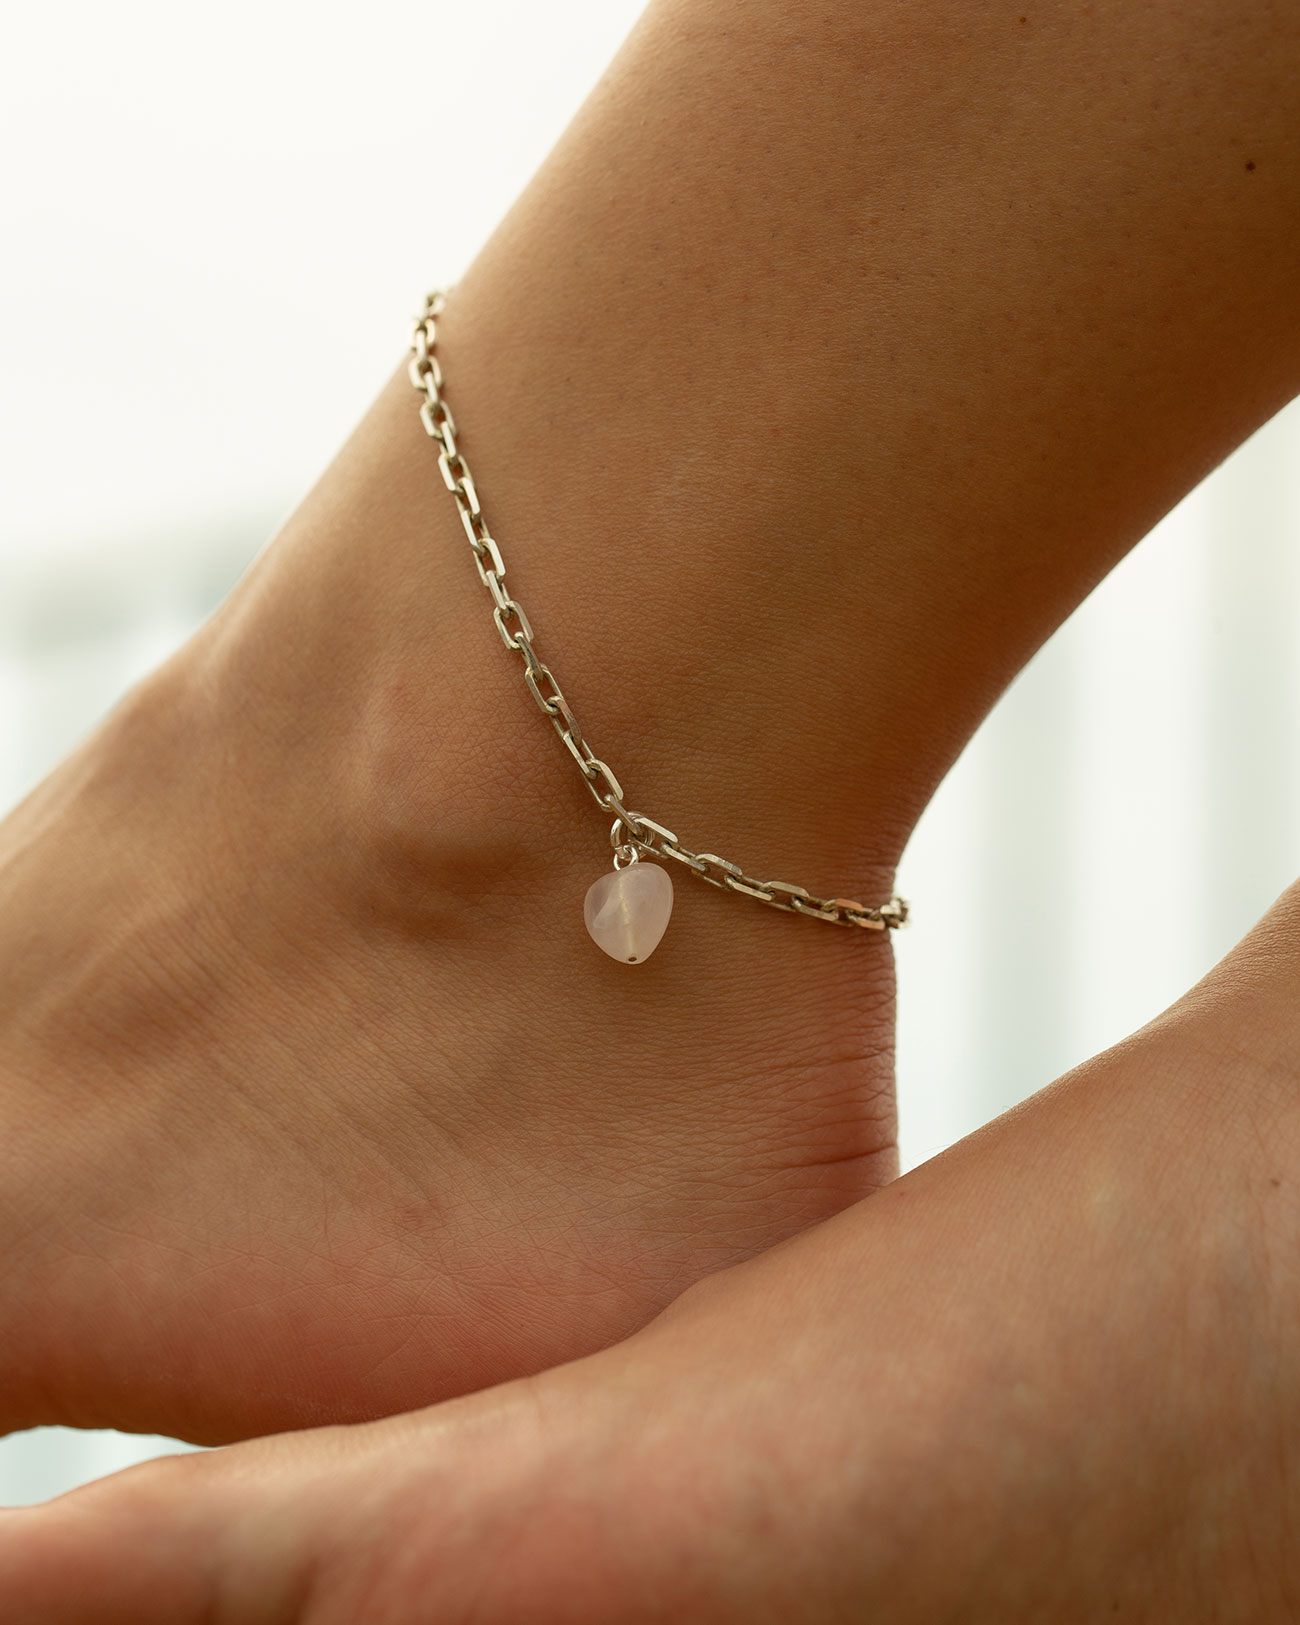 metaformi_design_jewelry_guilty_pleasures_silver_heart_ankle_bracelet_model